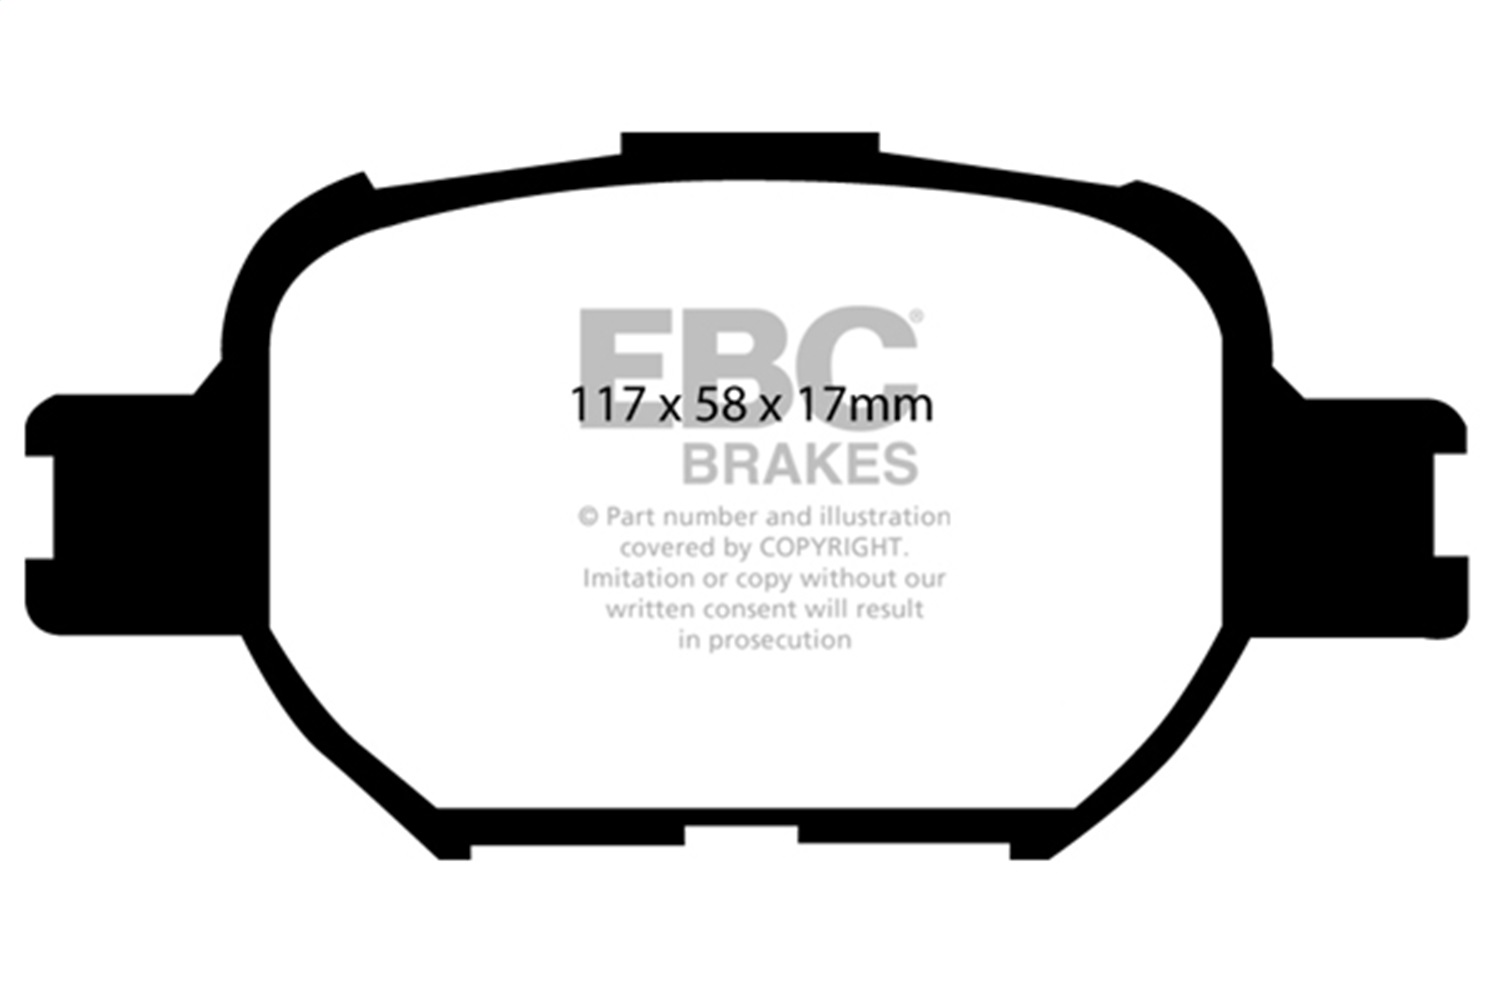 EBC Brakes UD817 Ultimax  Brake Pads Fits 00-10 Celica tC